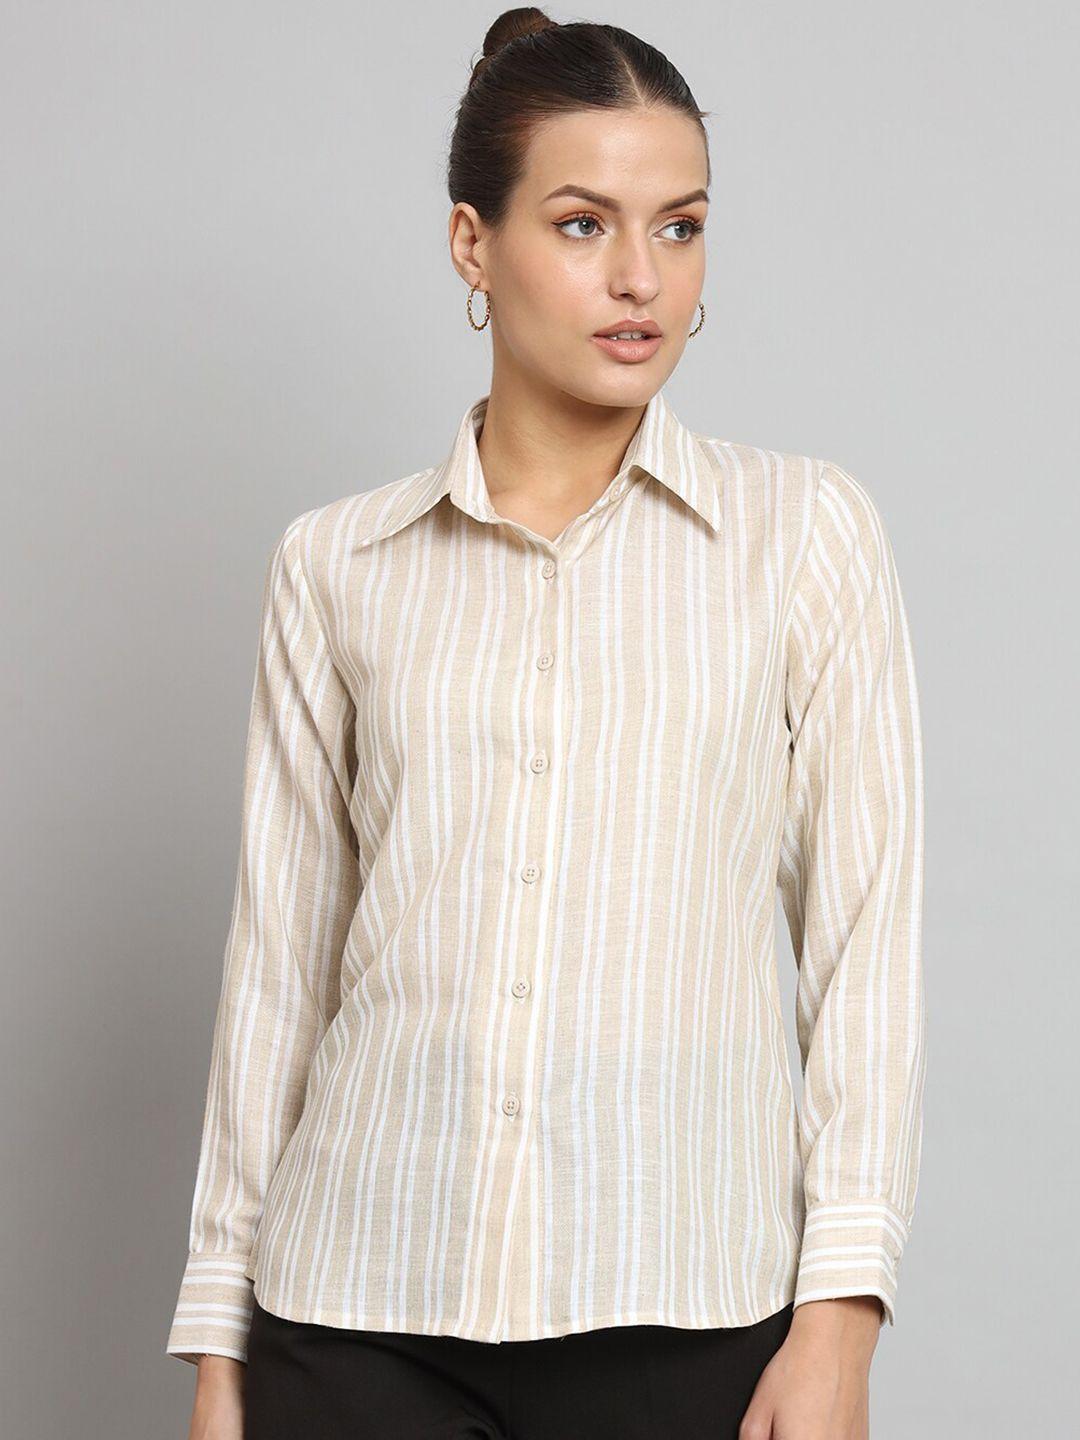 powersutra-classic-striped-casual-shirt